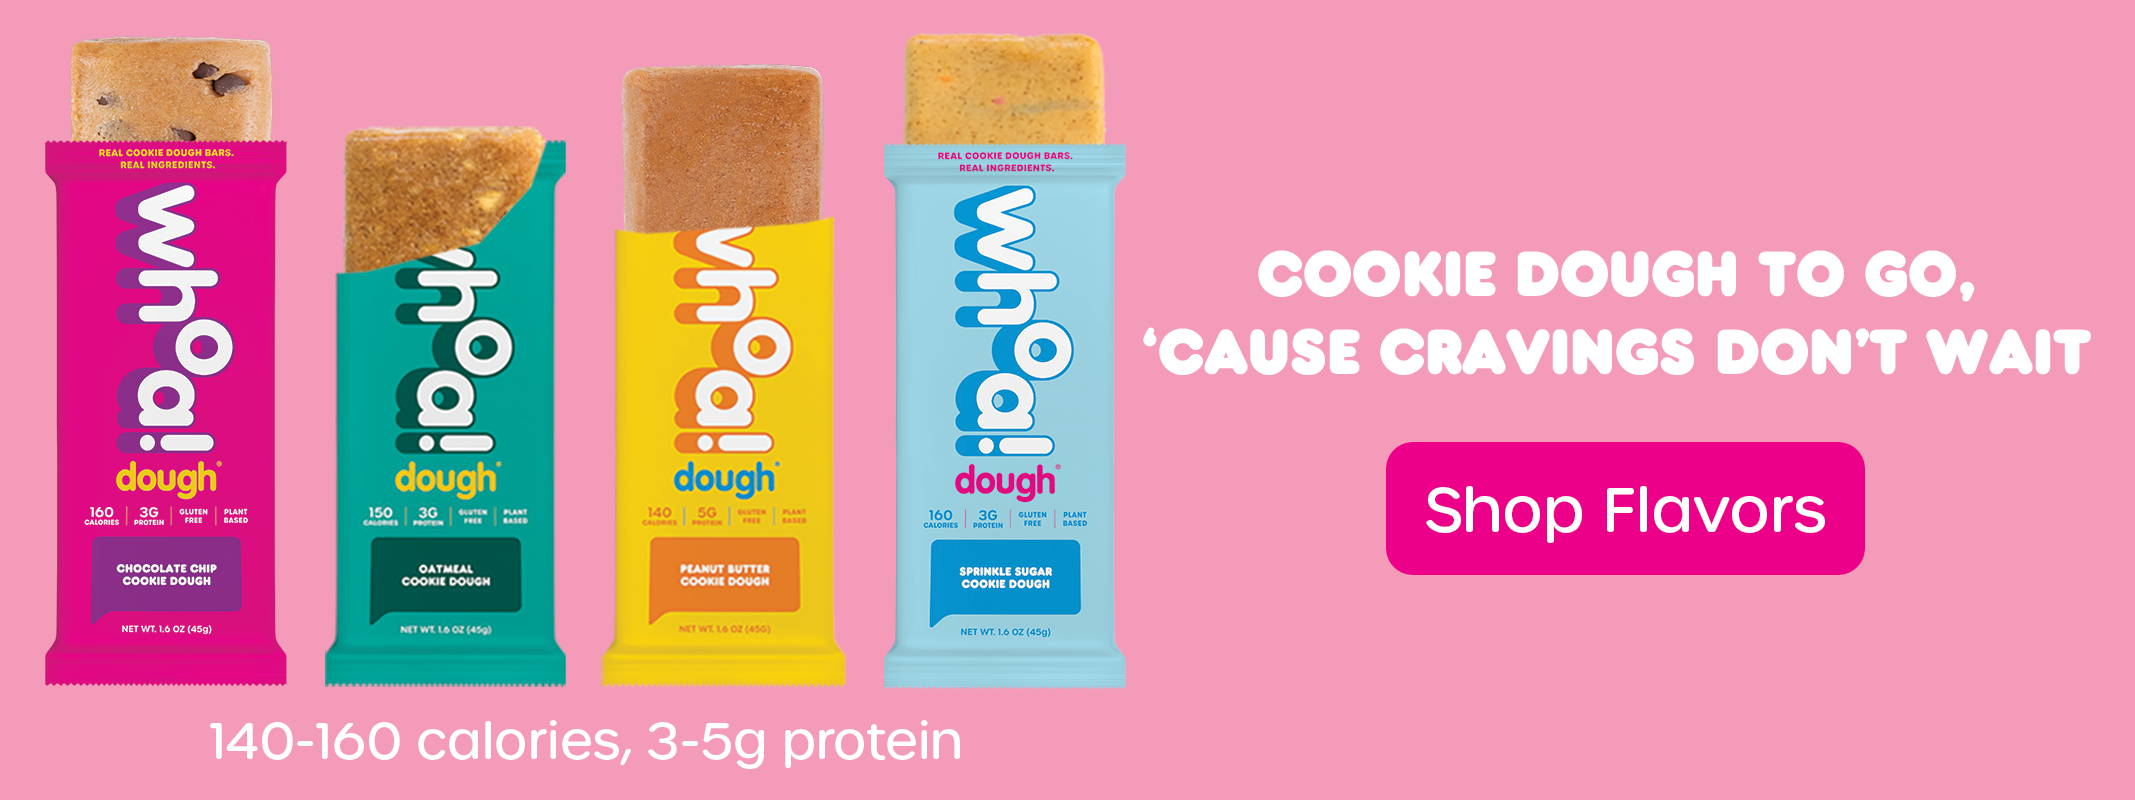 Whoa Dough debuts allergen-free cookie dough bars, 2019-09-24